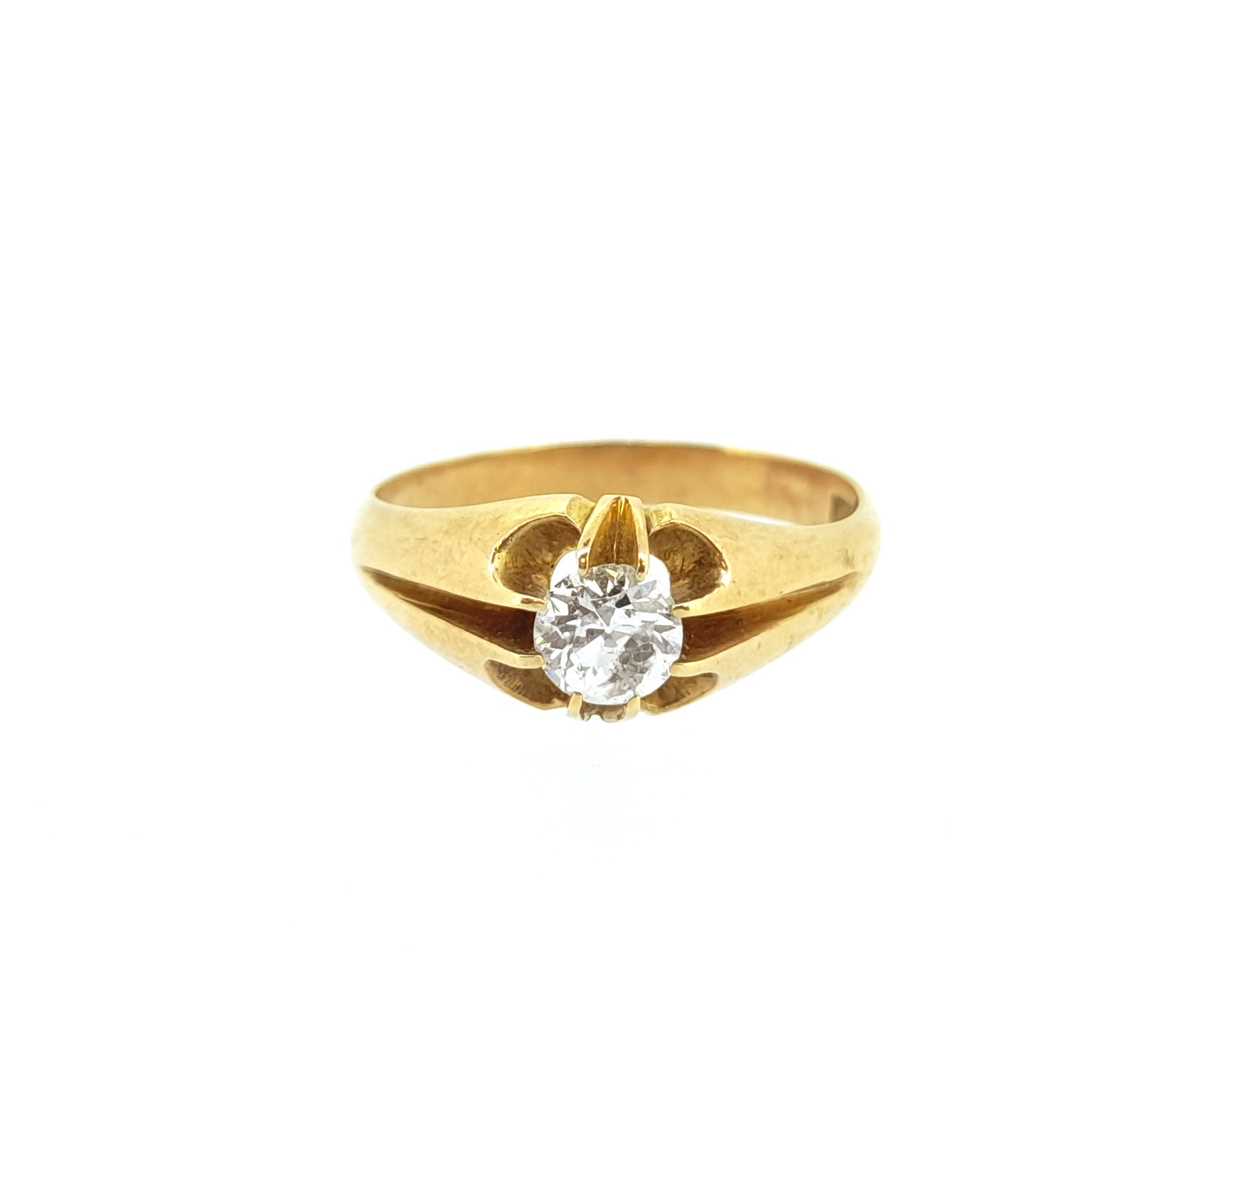 An early 20th century gentleman's single stone diamond ring, - Image 4 of 4